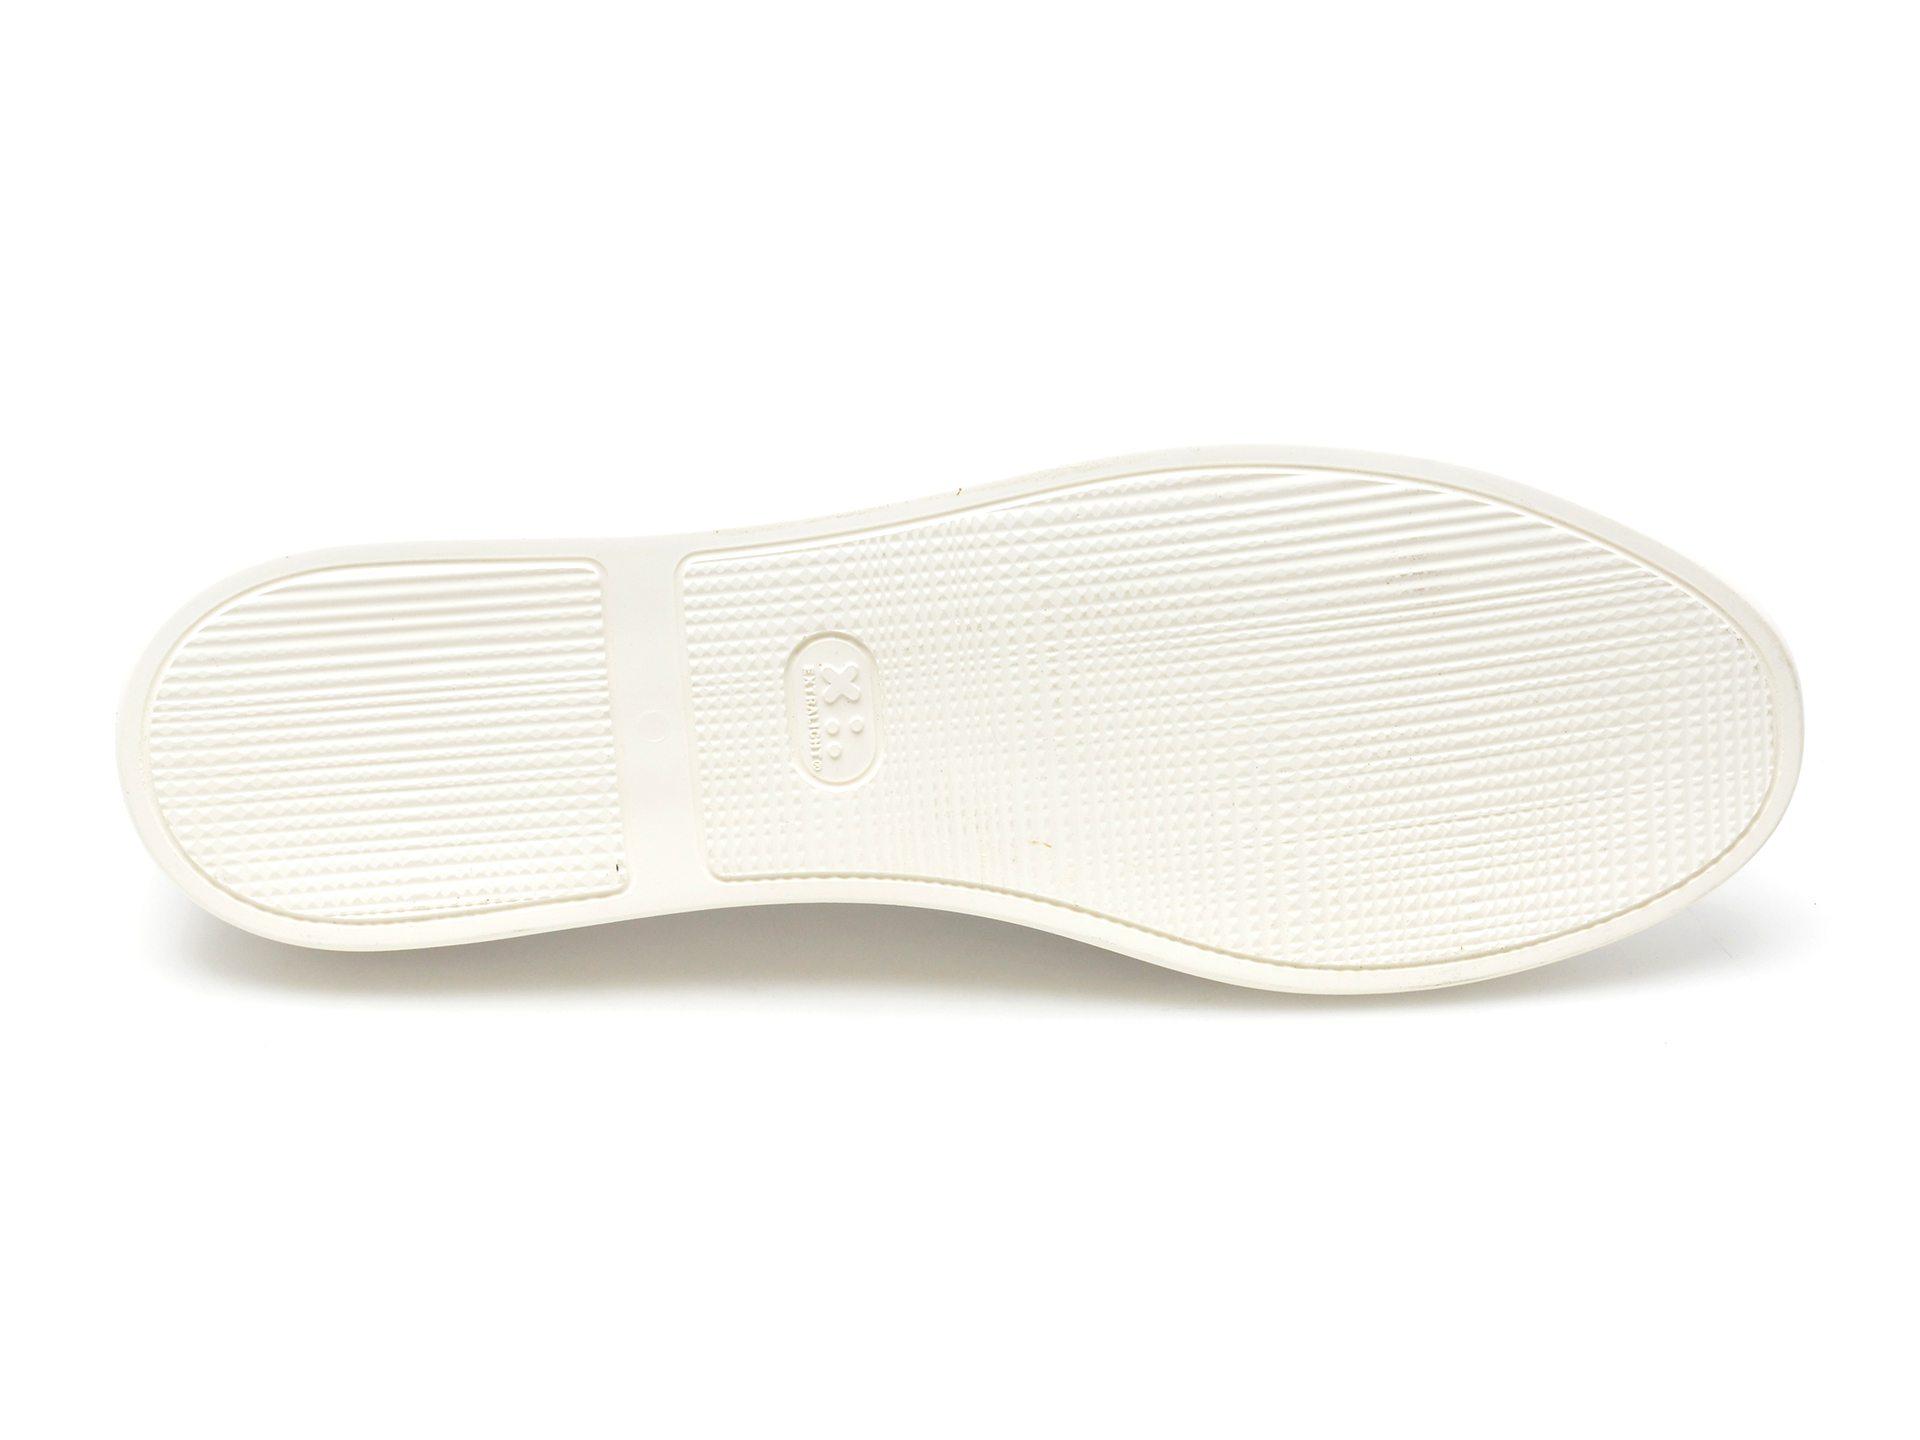 Pantofi EPICA albi, 3460, din piele naturala